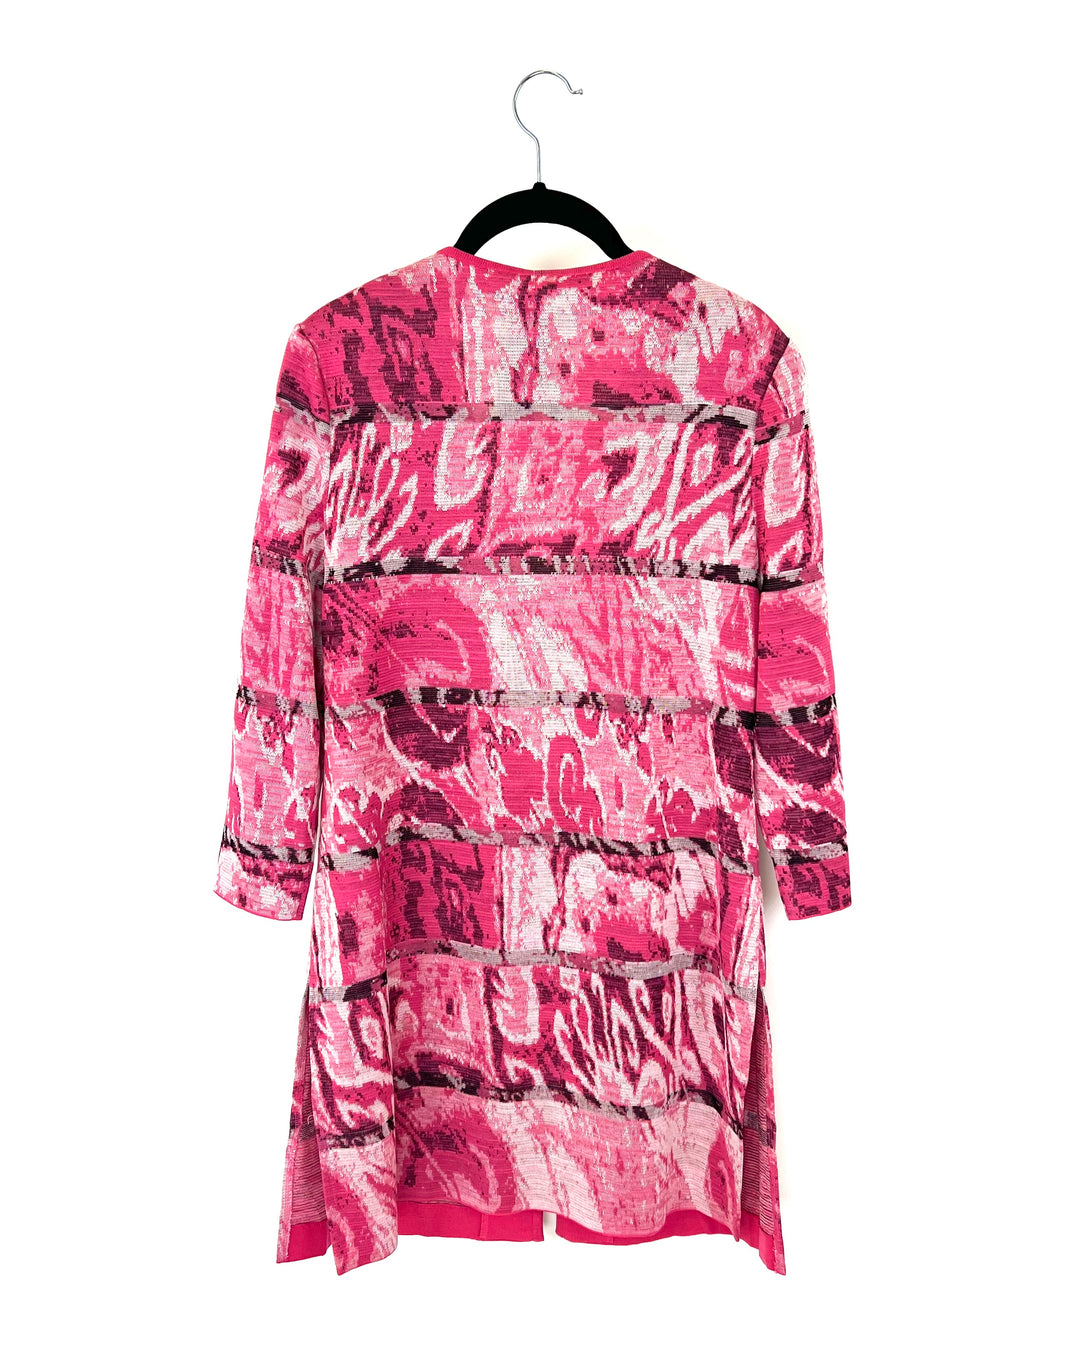 Pink Patterned Quarter Sleeve Cardigan - Size 2-4